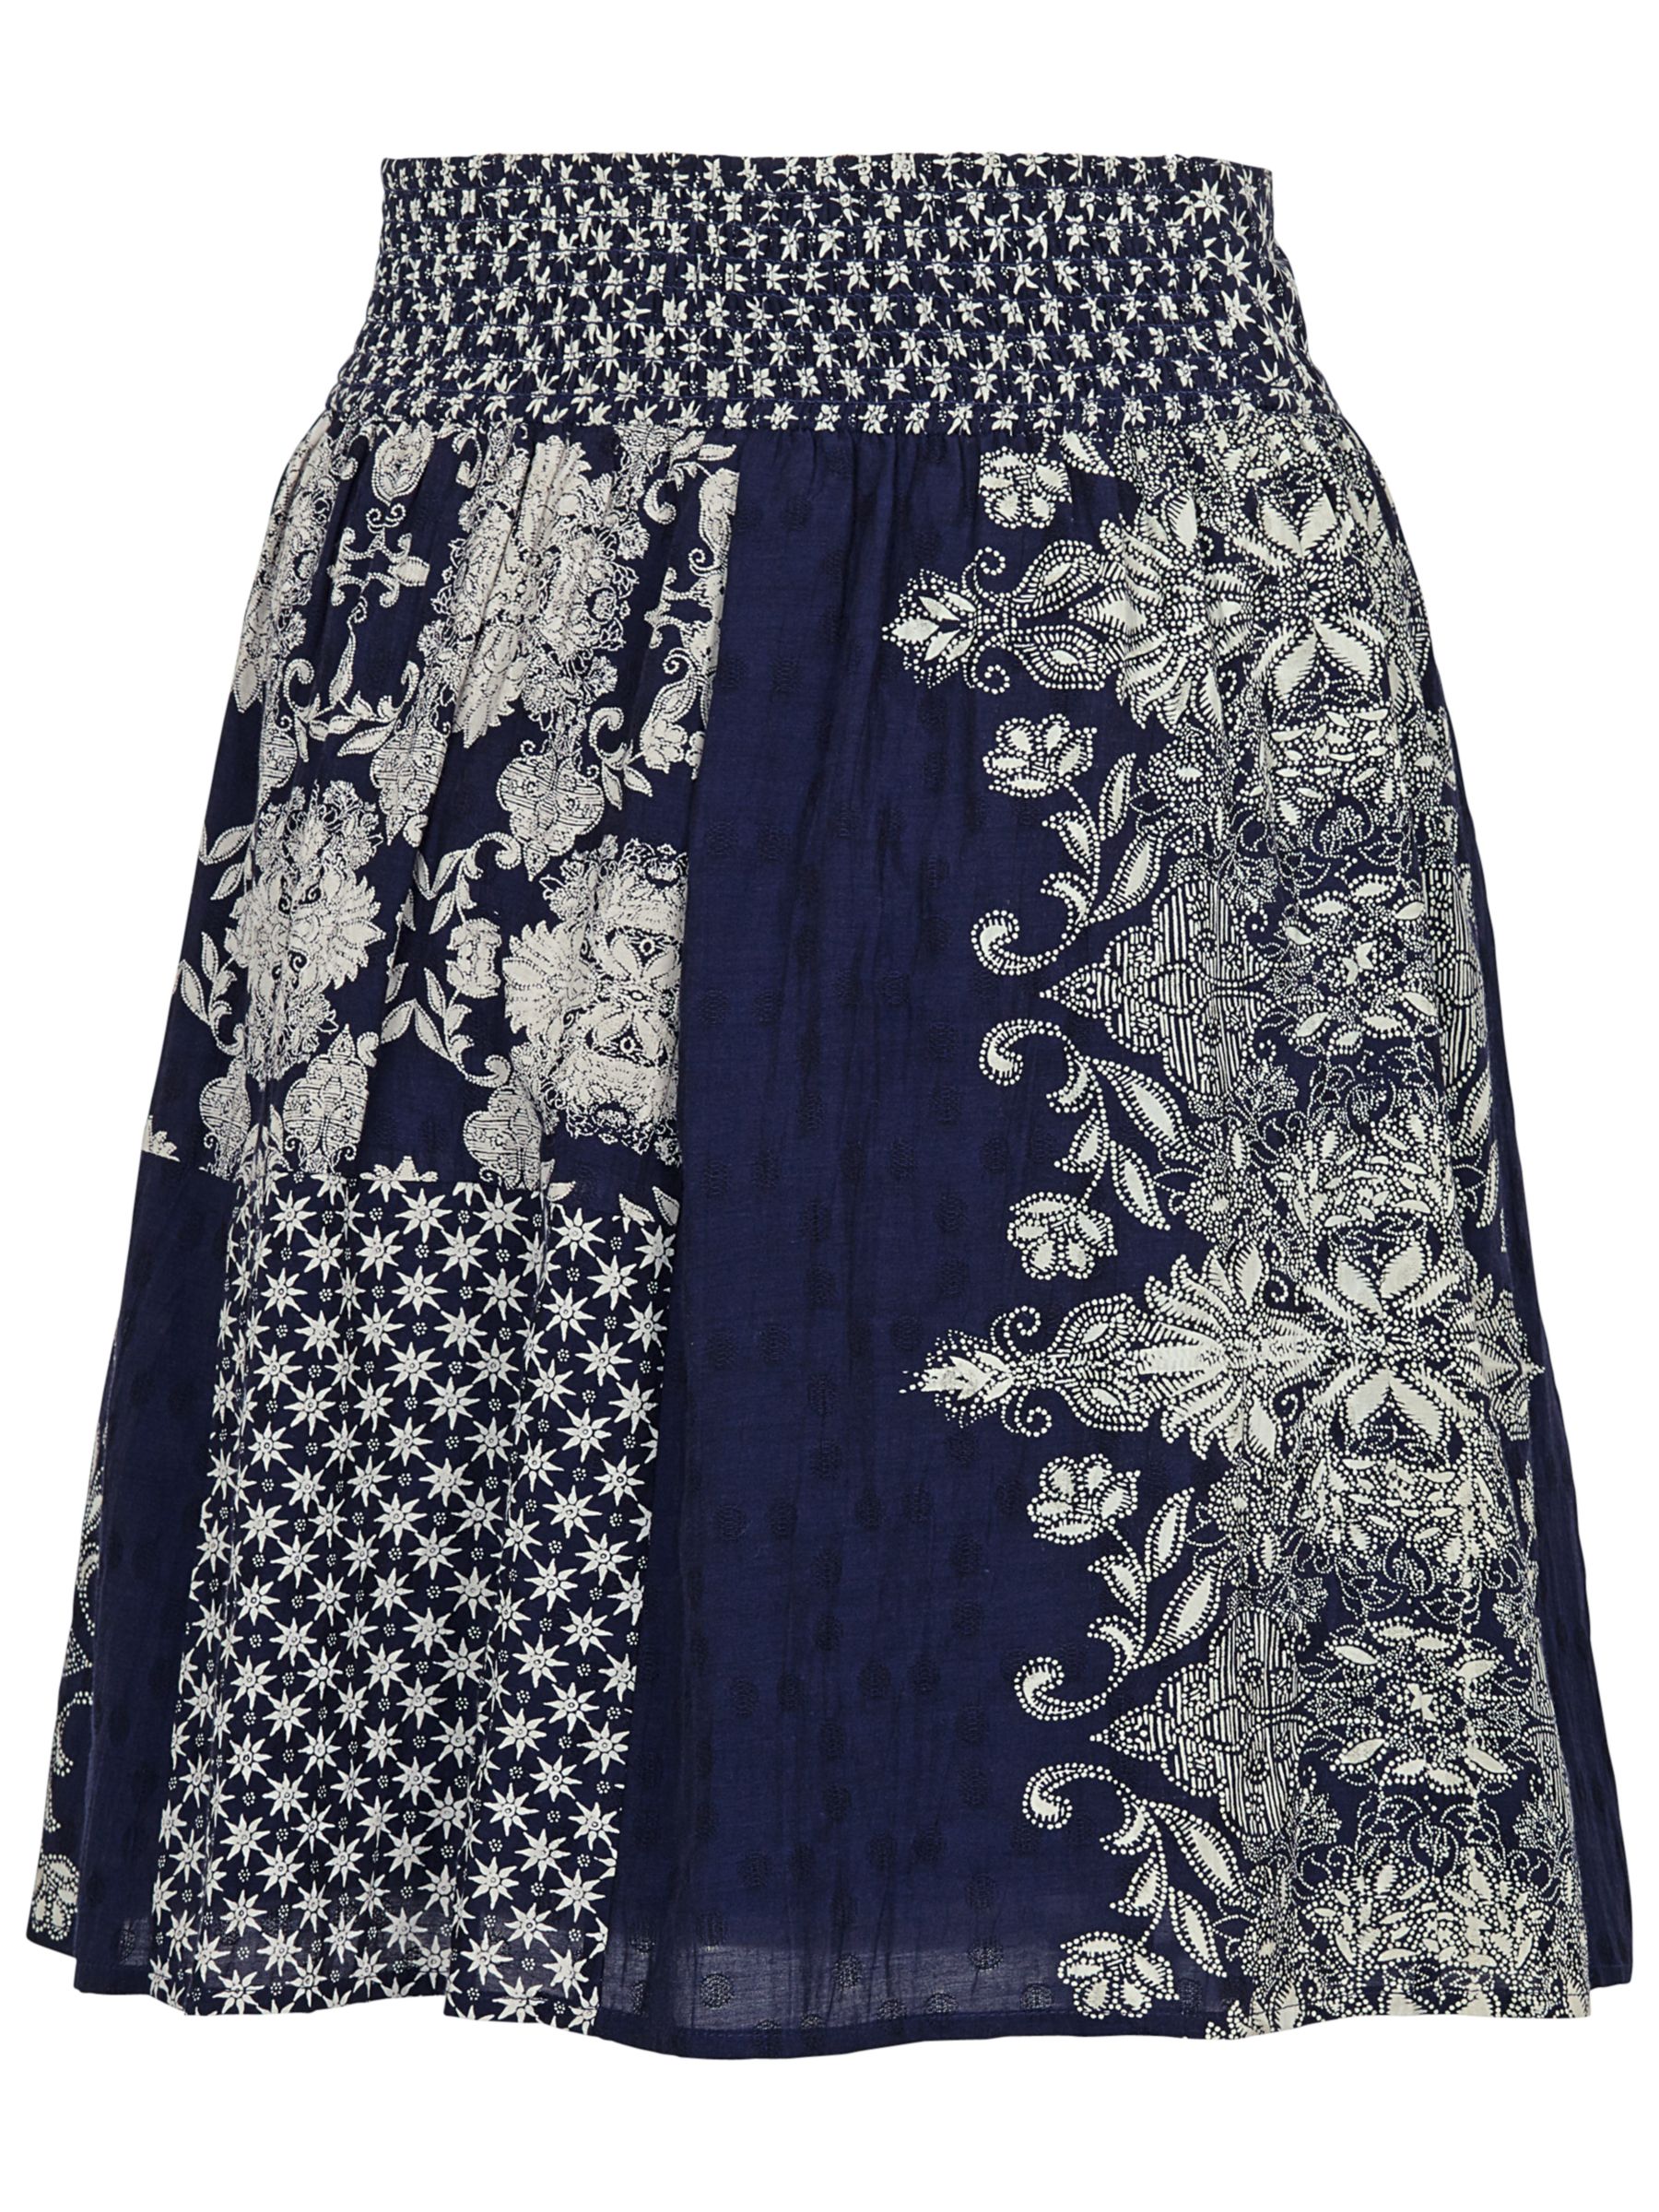 Fat Face Dotty Floral Patchwork Skirt, Indigo at John Lewis & Partners